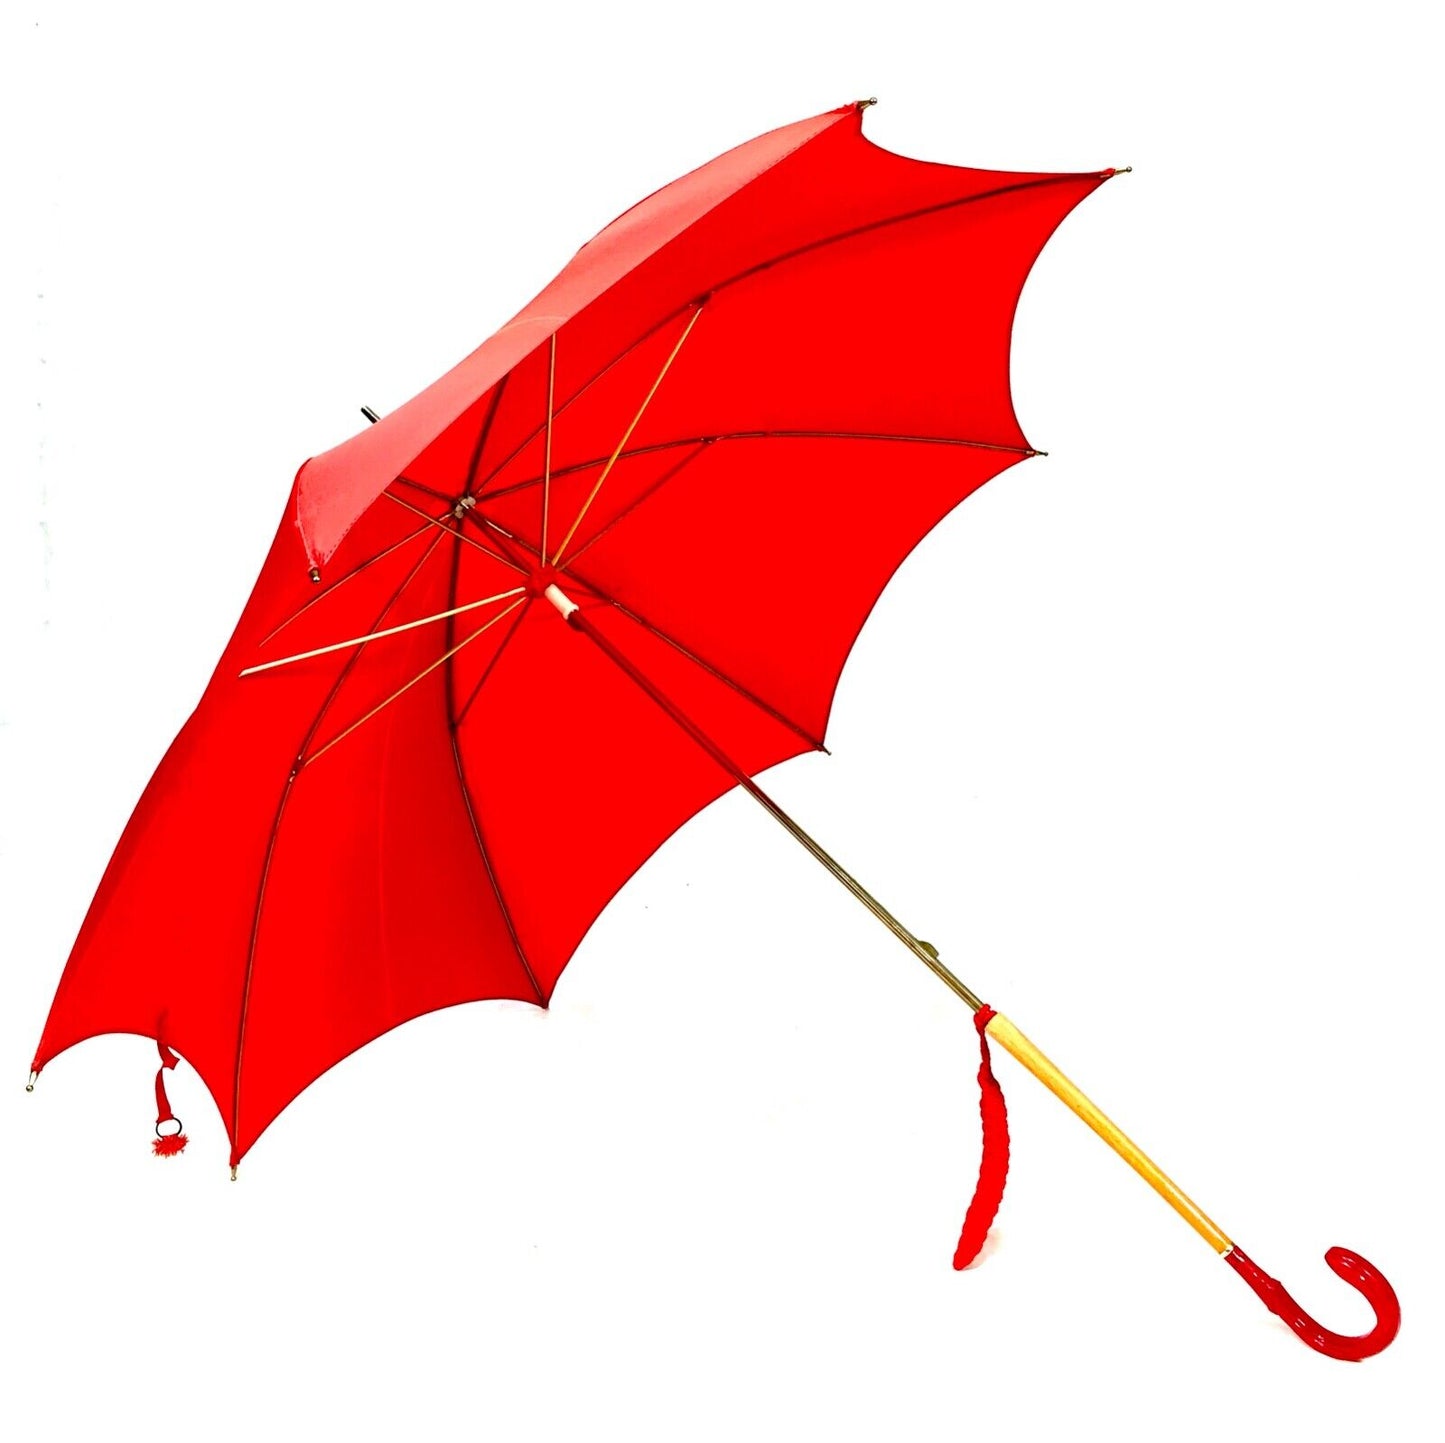 Vintage Clothing - 1950s / 60s Ladies Umbrella / Parasol / Red / Fully Working